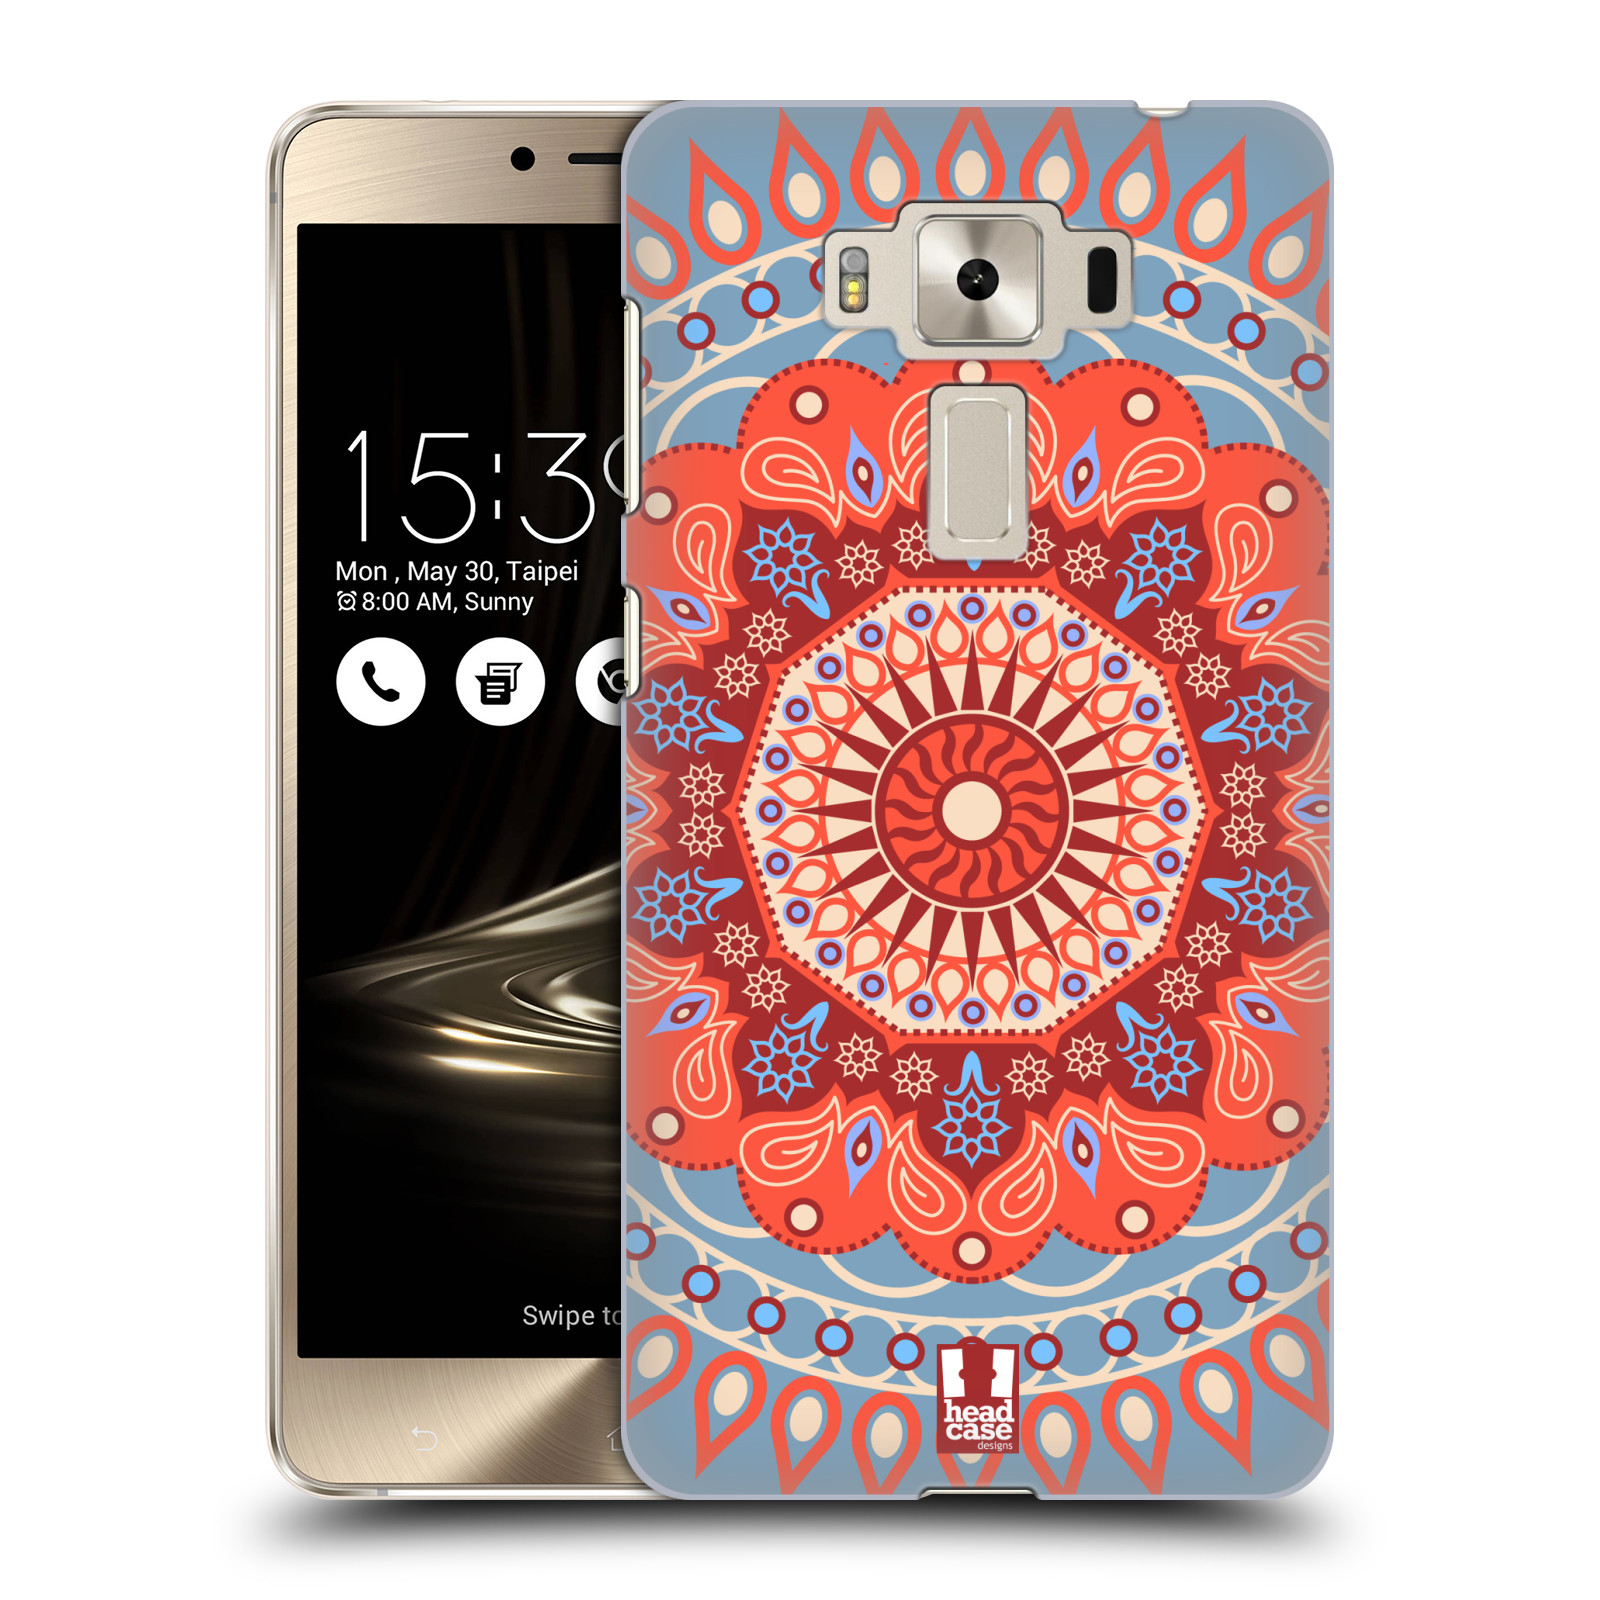 HEAD CASE plastový obal na mobil Asus Zenfone 3 DELUXE ZS550KL vzor Indie Mandala slunce barevný motiv ČERVENÁ A MODRÁ